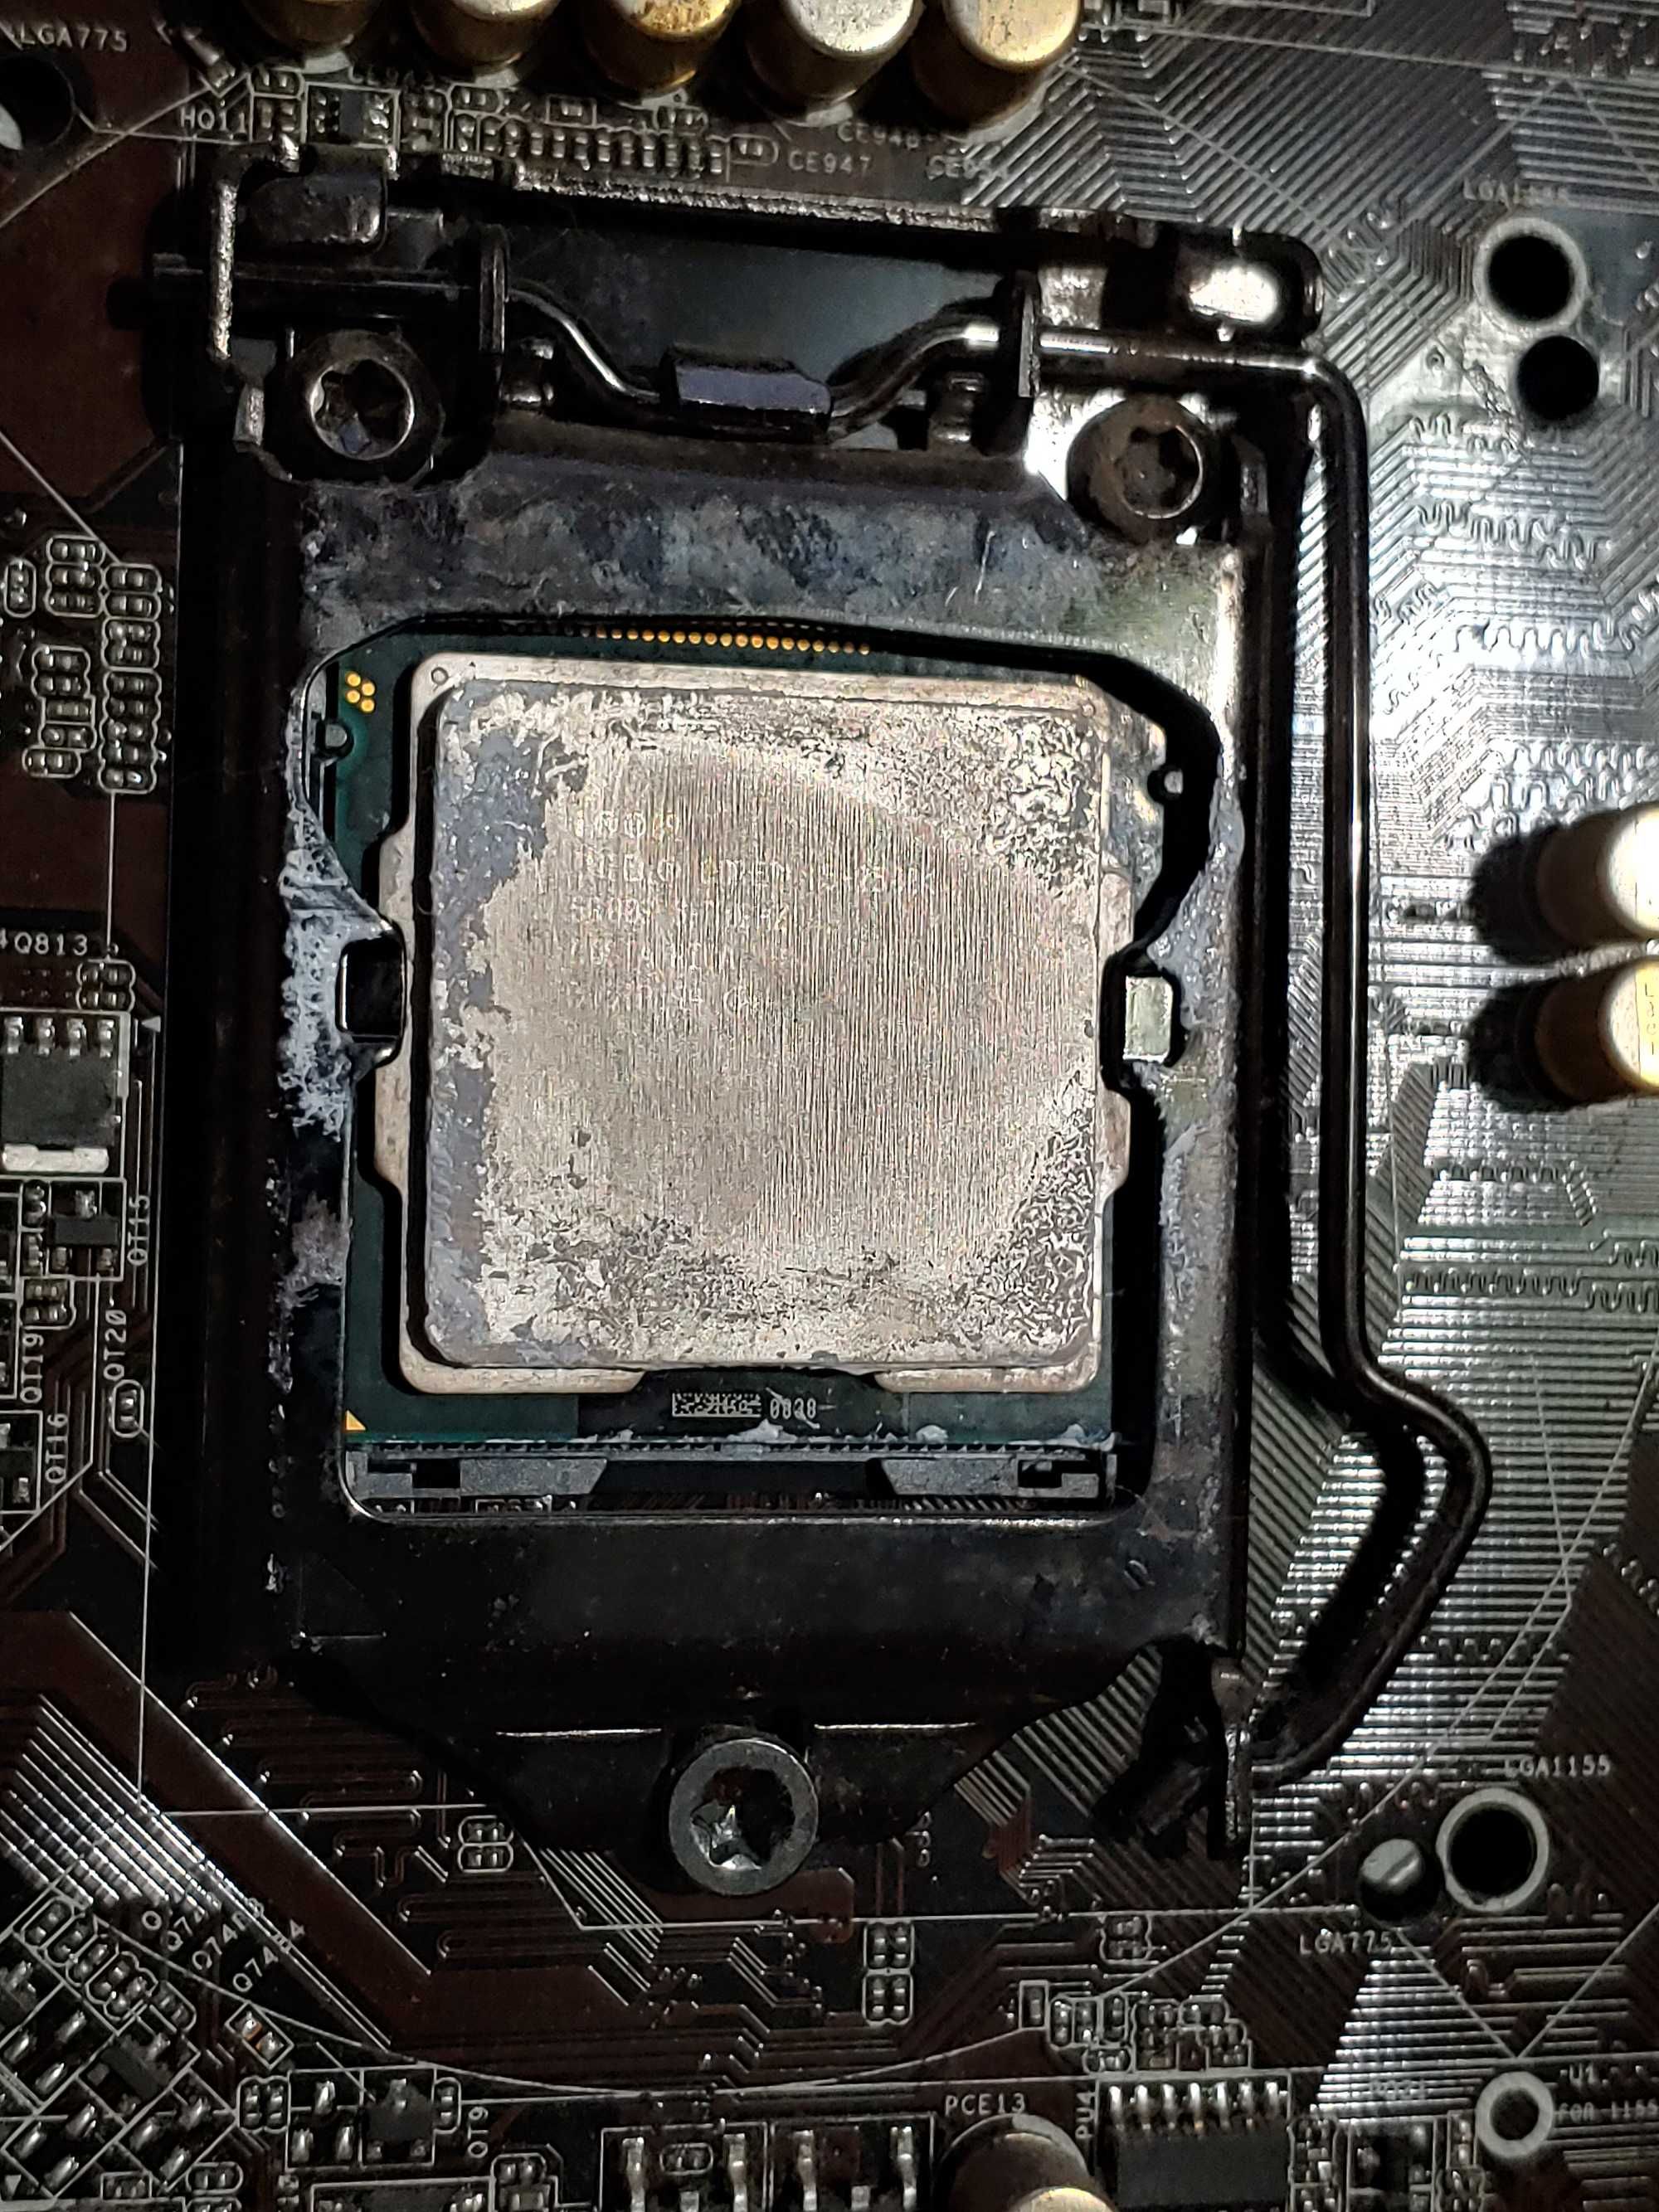 Топ-плата Asrock Z77 Extreme4 топ-процессор Intel i5-2500k сокет 1155